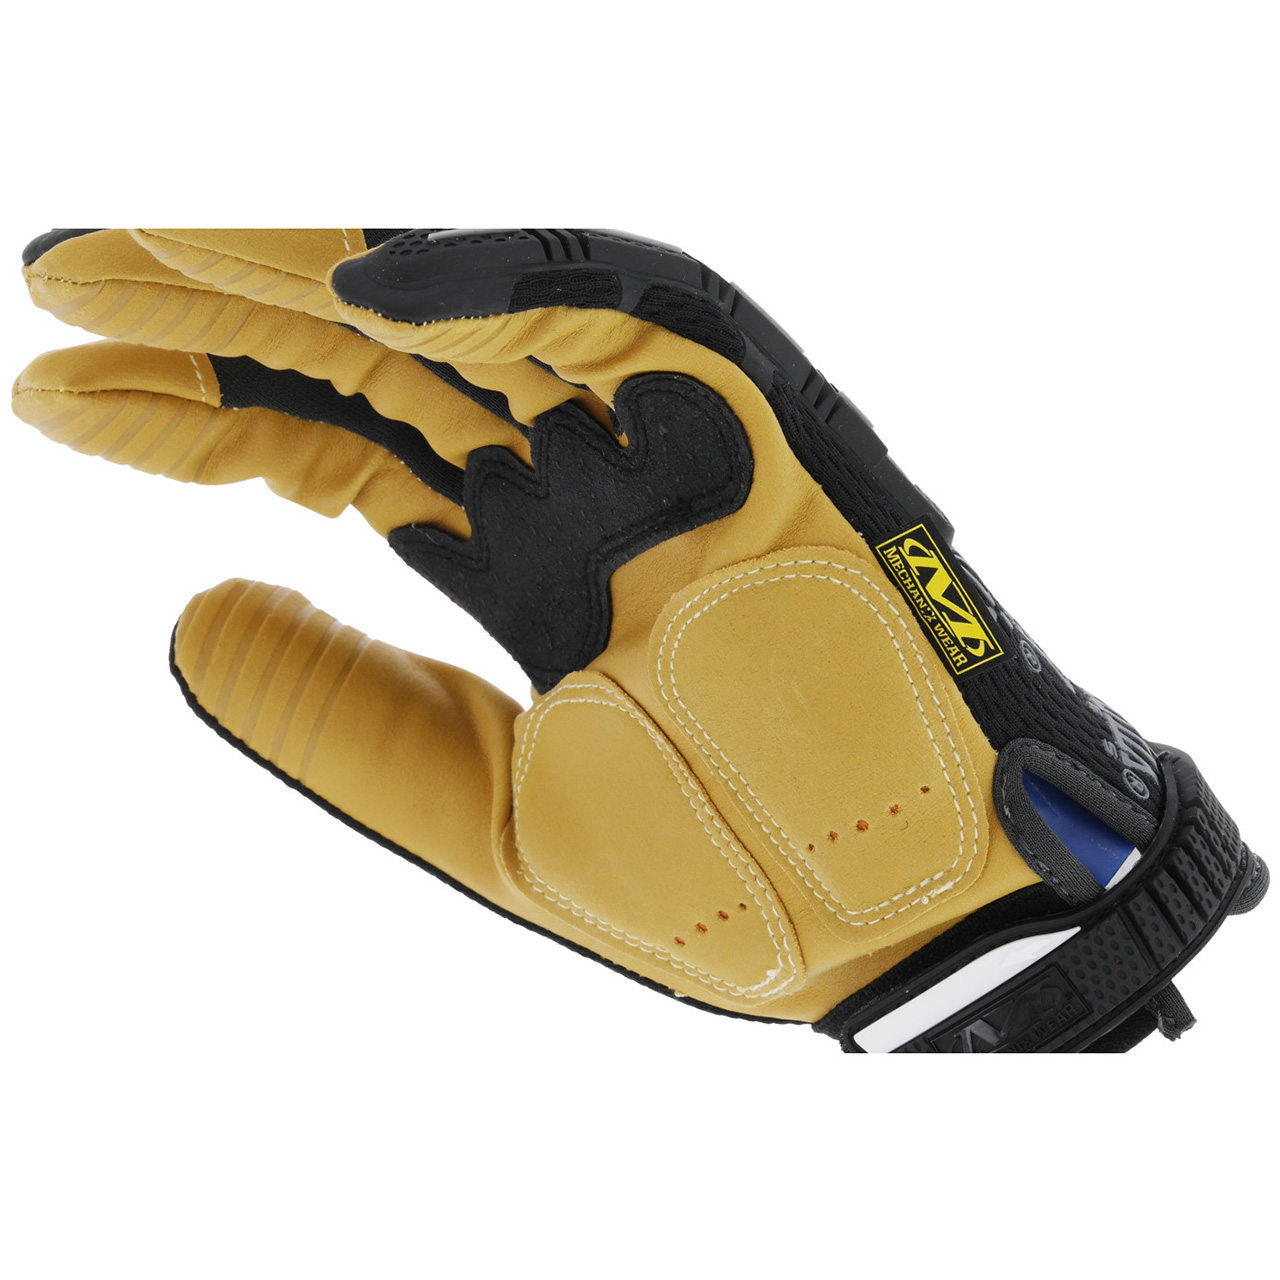 Mechanix Material M-Pact Gloves